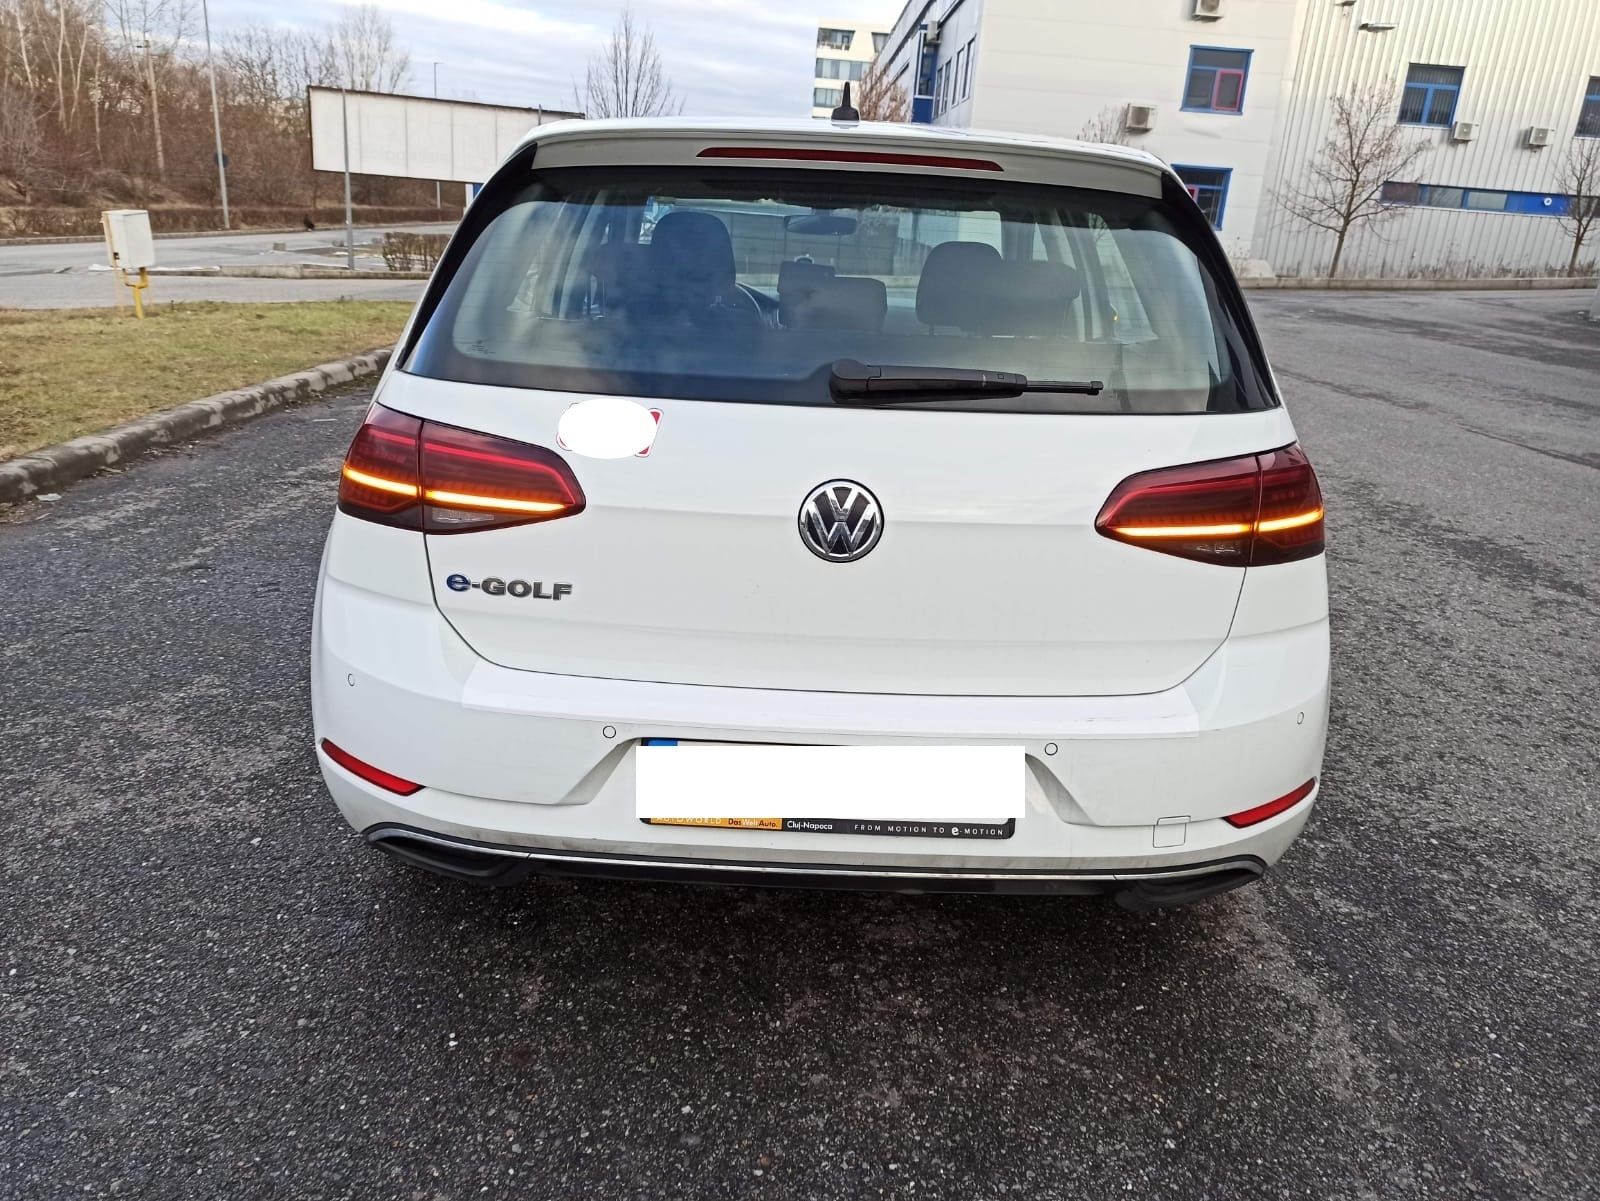 Volkswagen e-Golf/ VW e-Golf/ 2019 electric